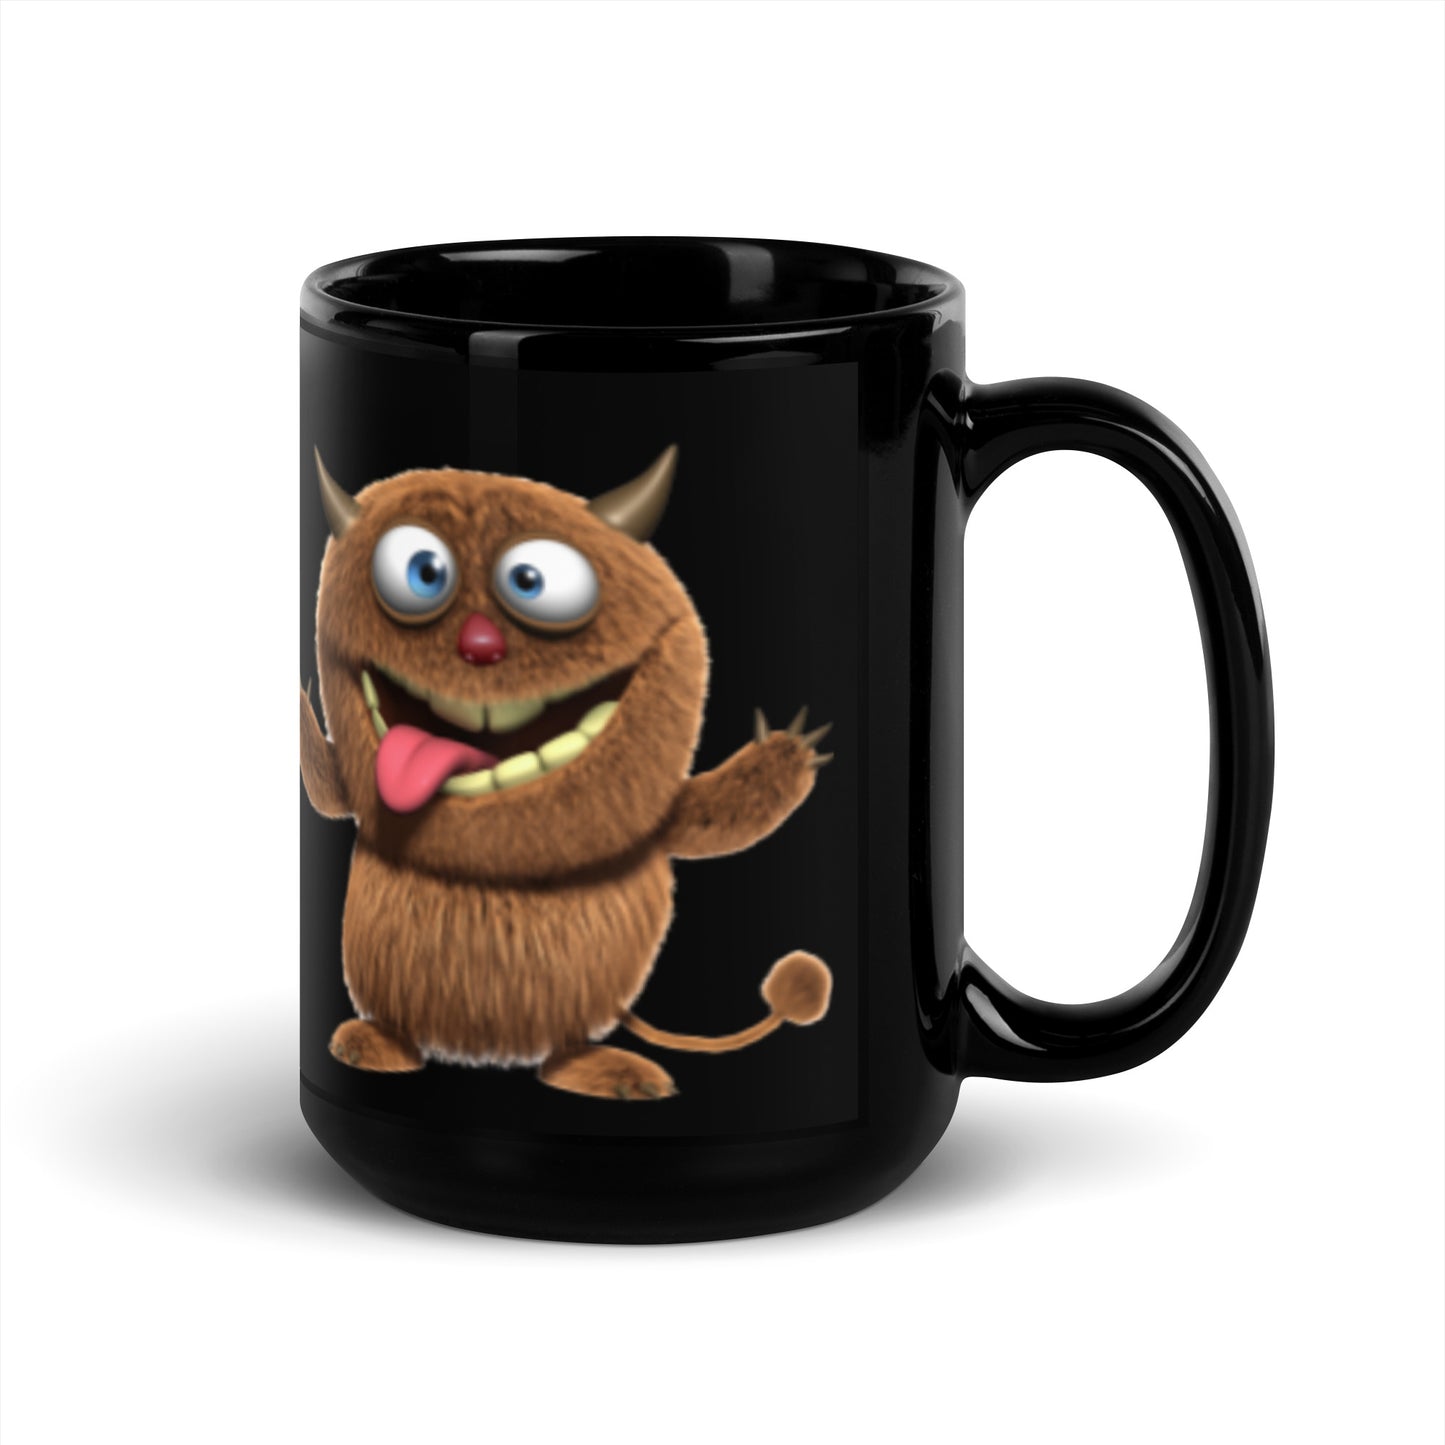 Wake-Up Smiling THUMPER & PULPHOUSE GLOSSY BLACK MUG - Goofy Coffee Tea Mug Fun & Humorous